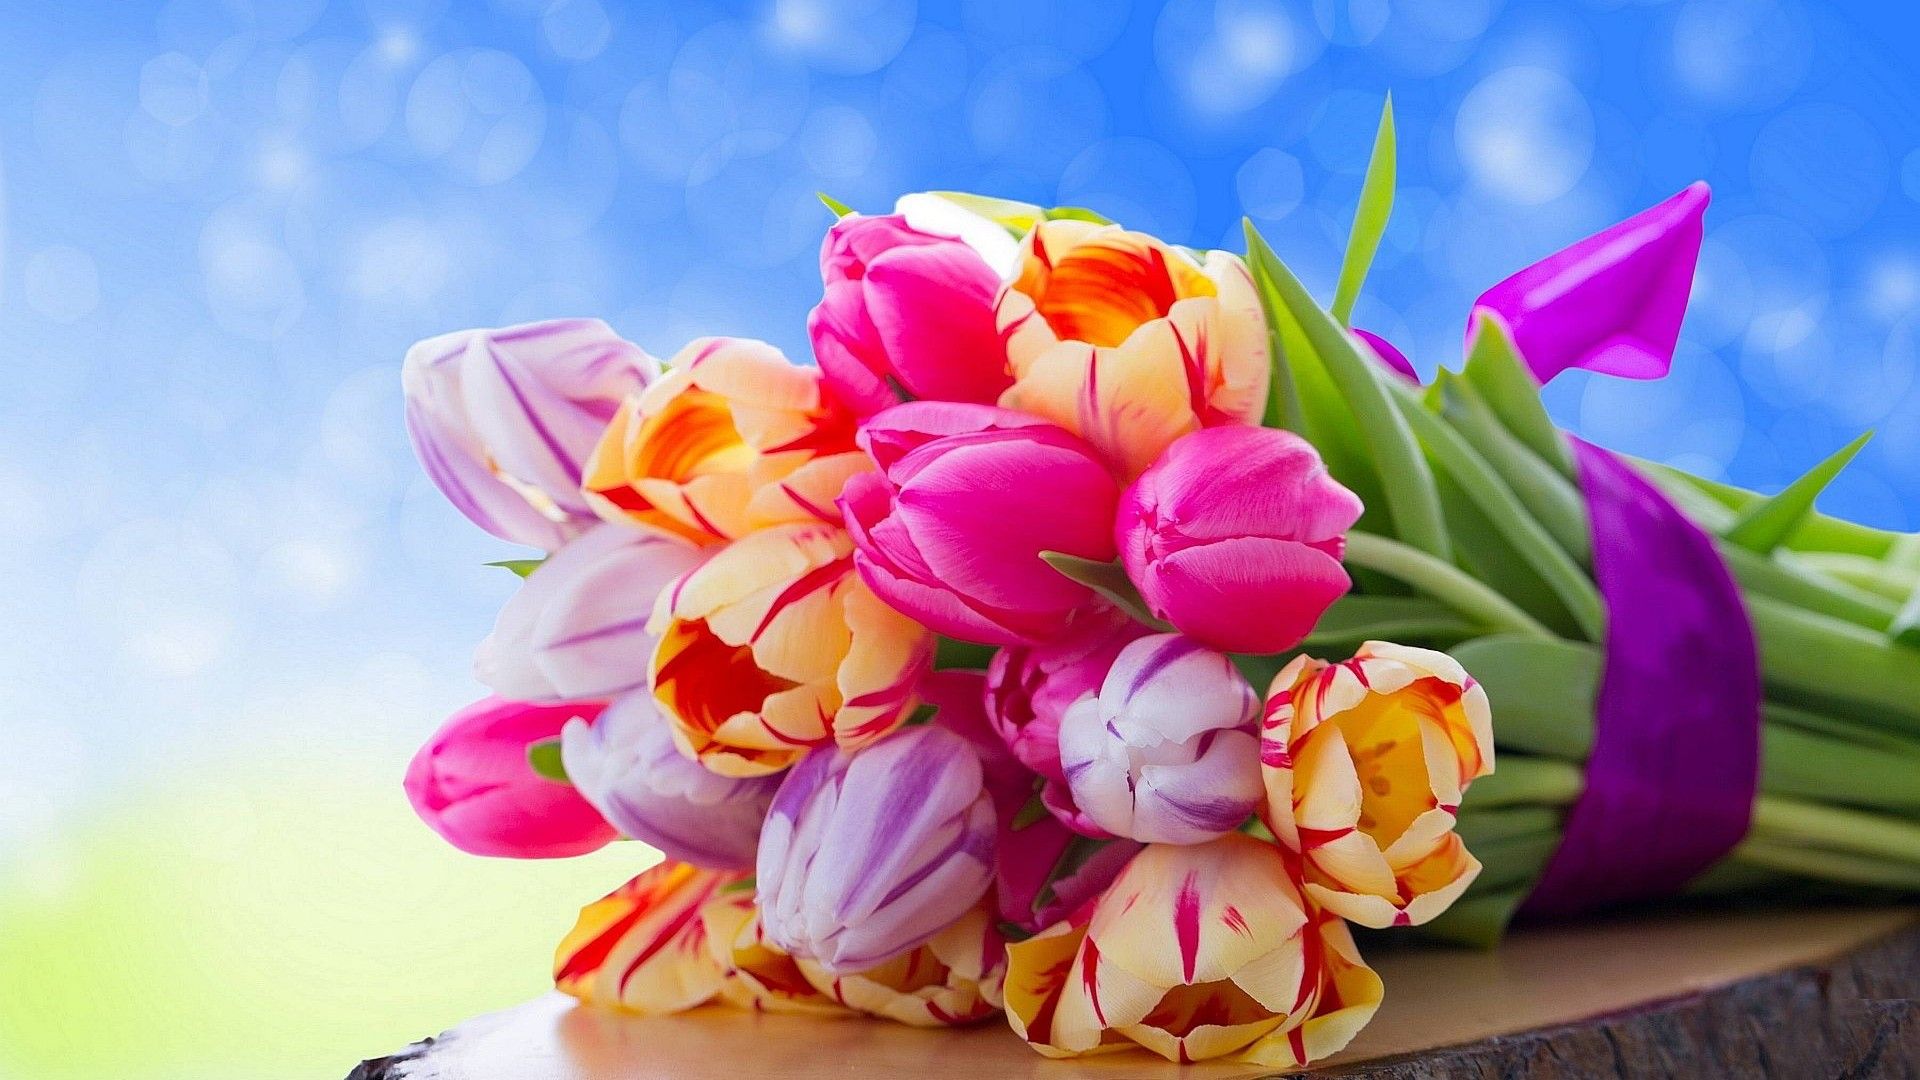 Colorful Tulips Wallpaper Download For Desktop, PC & Mobile